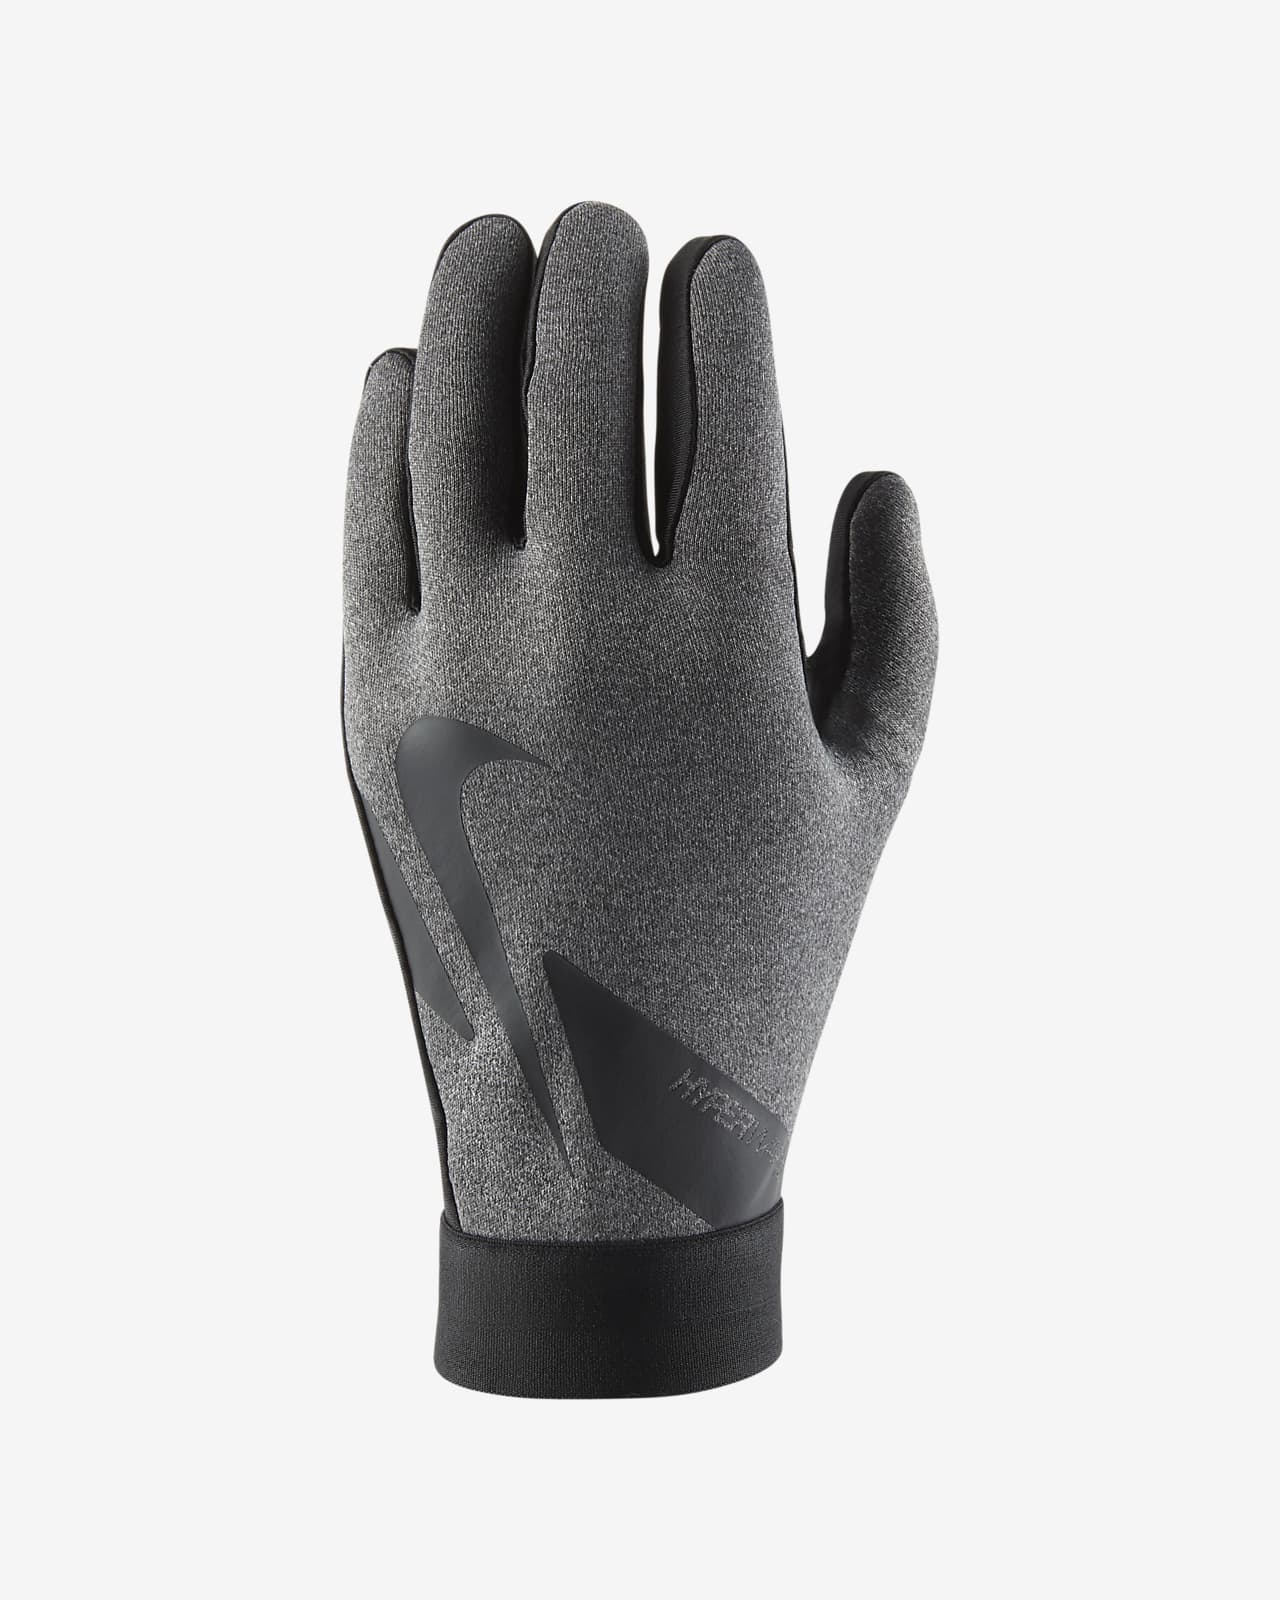 nike hyperwarm gloves australia